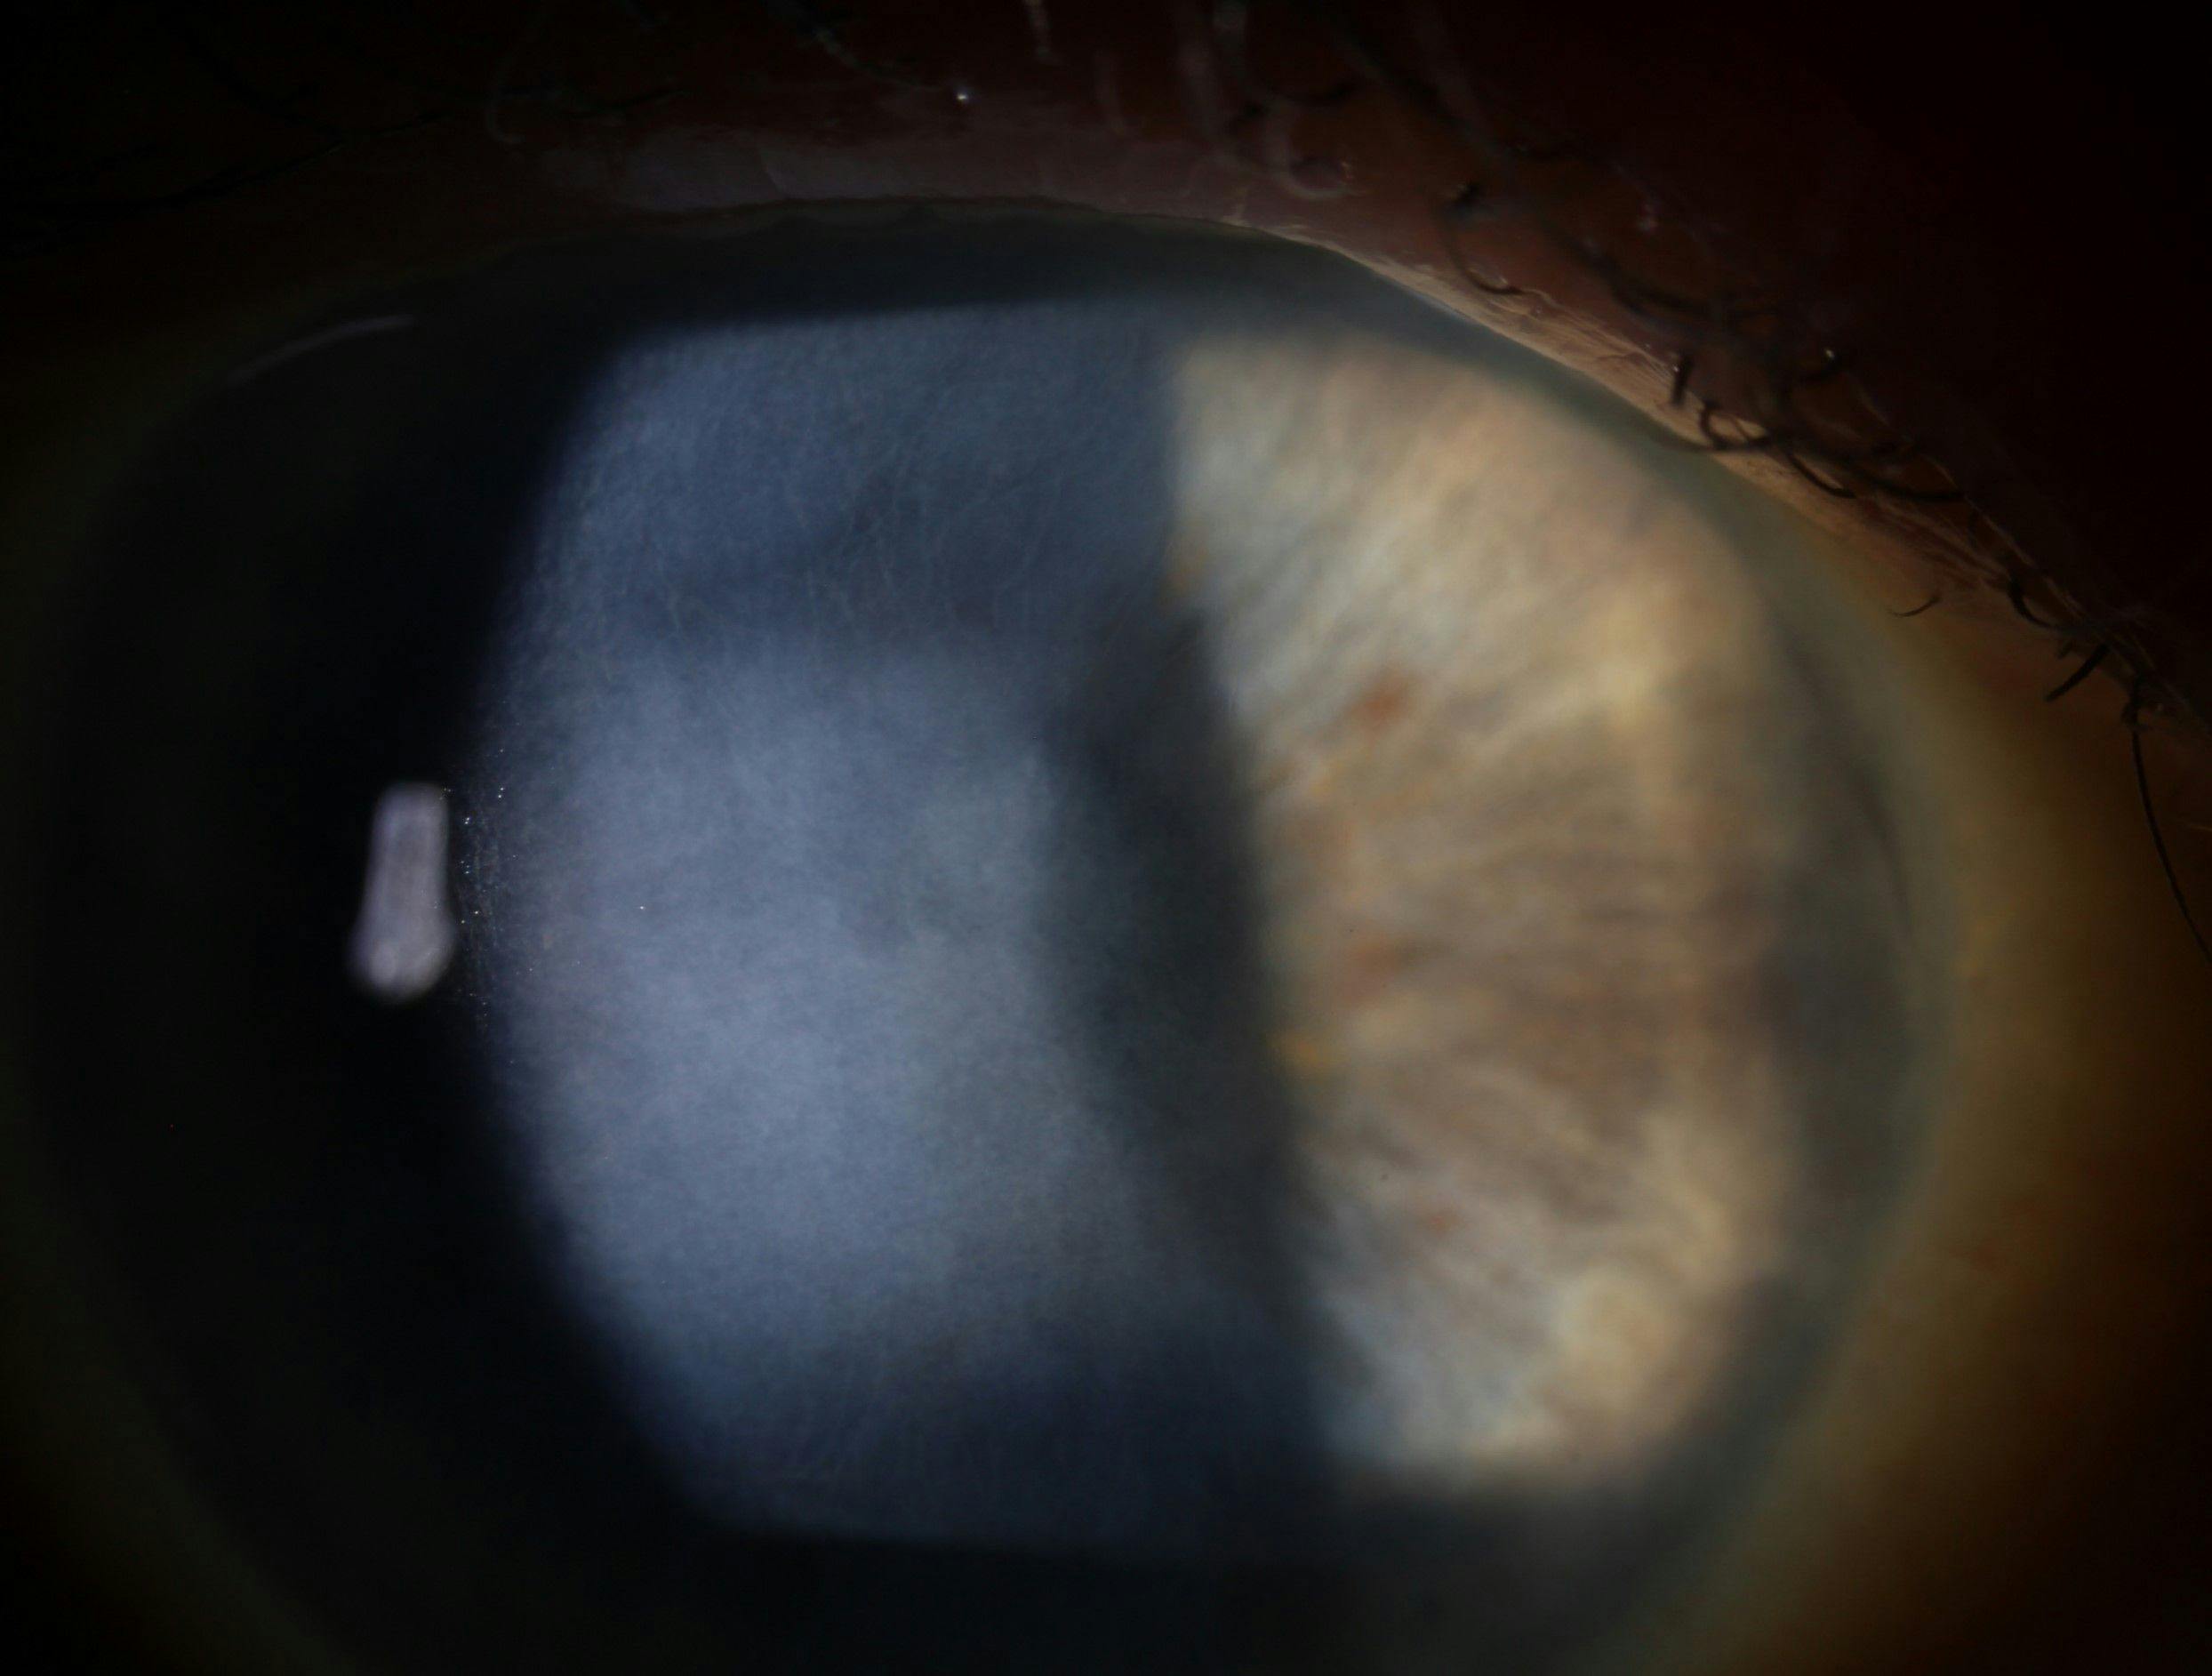 Stromal scarring ocular syphilis